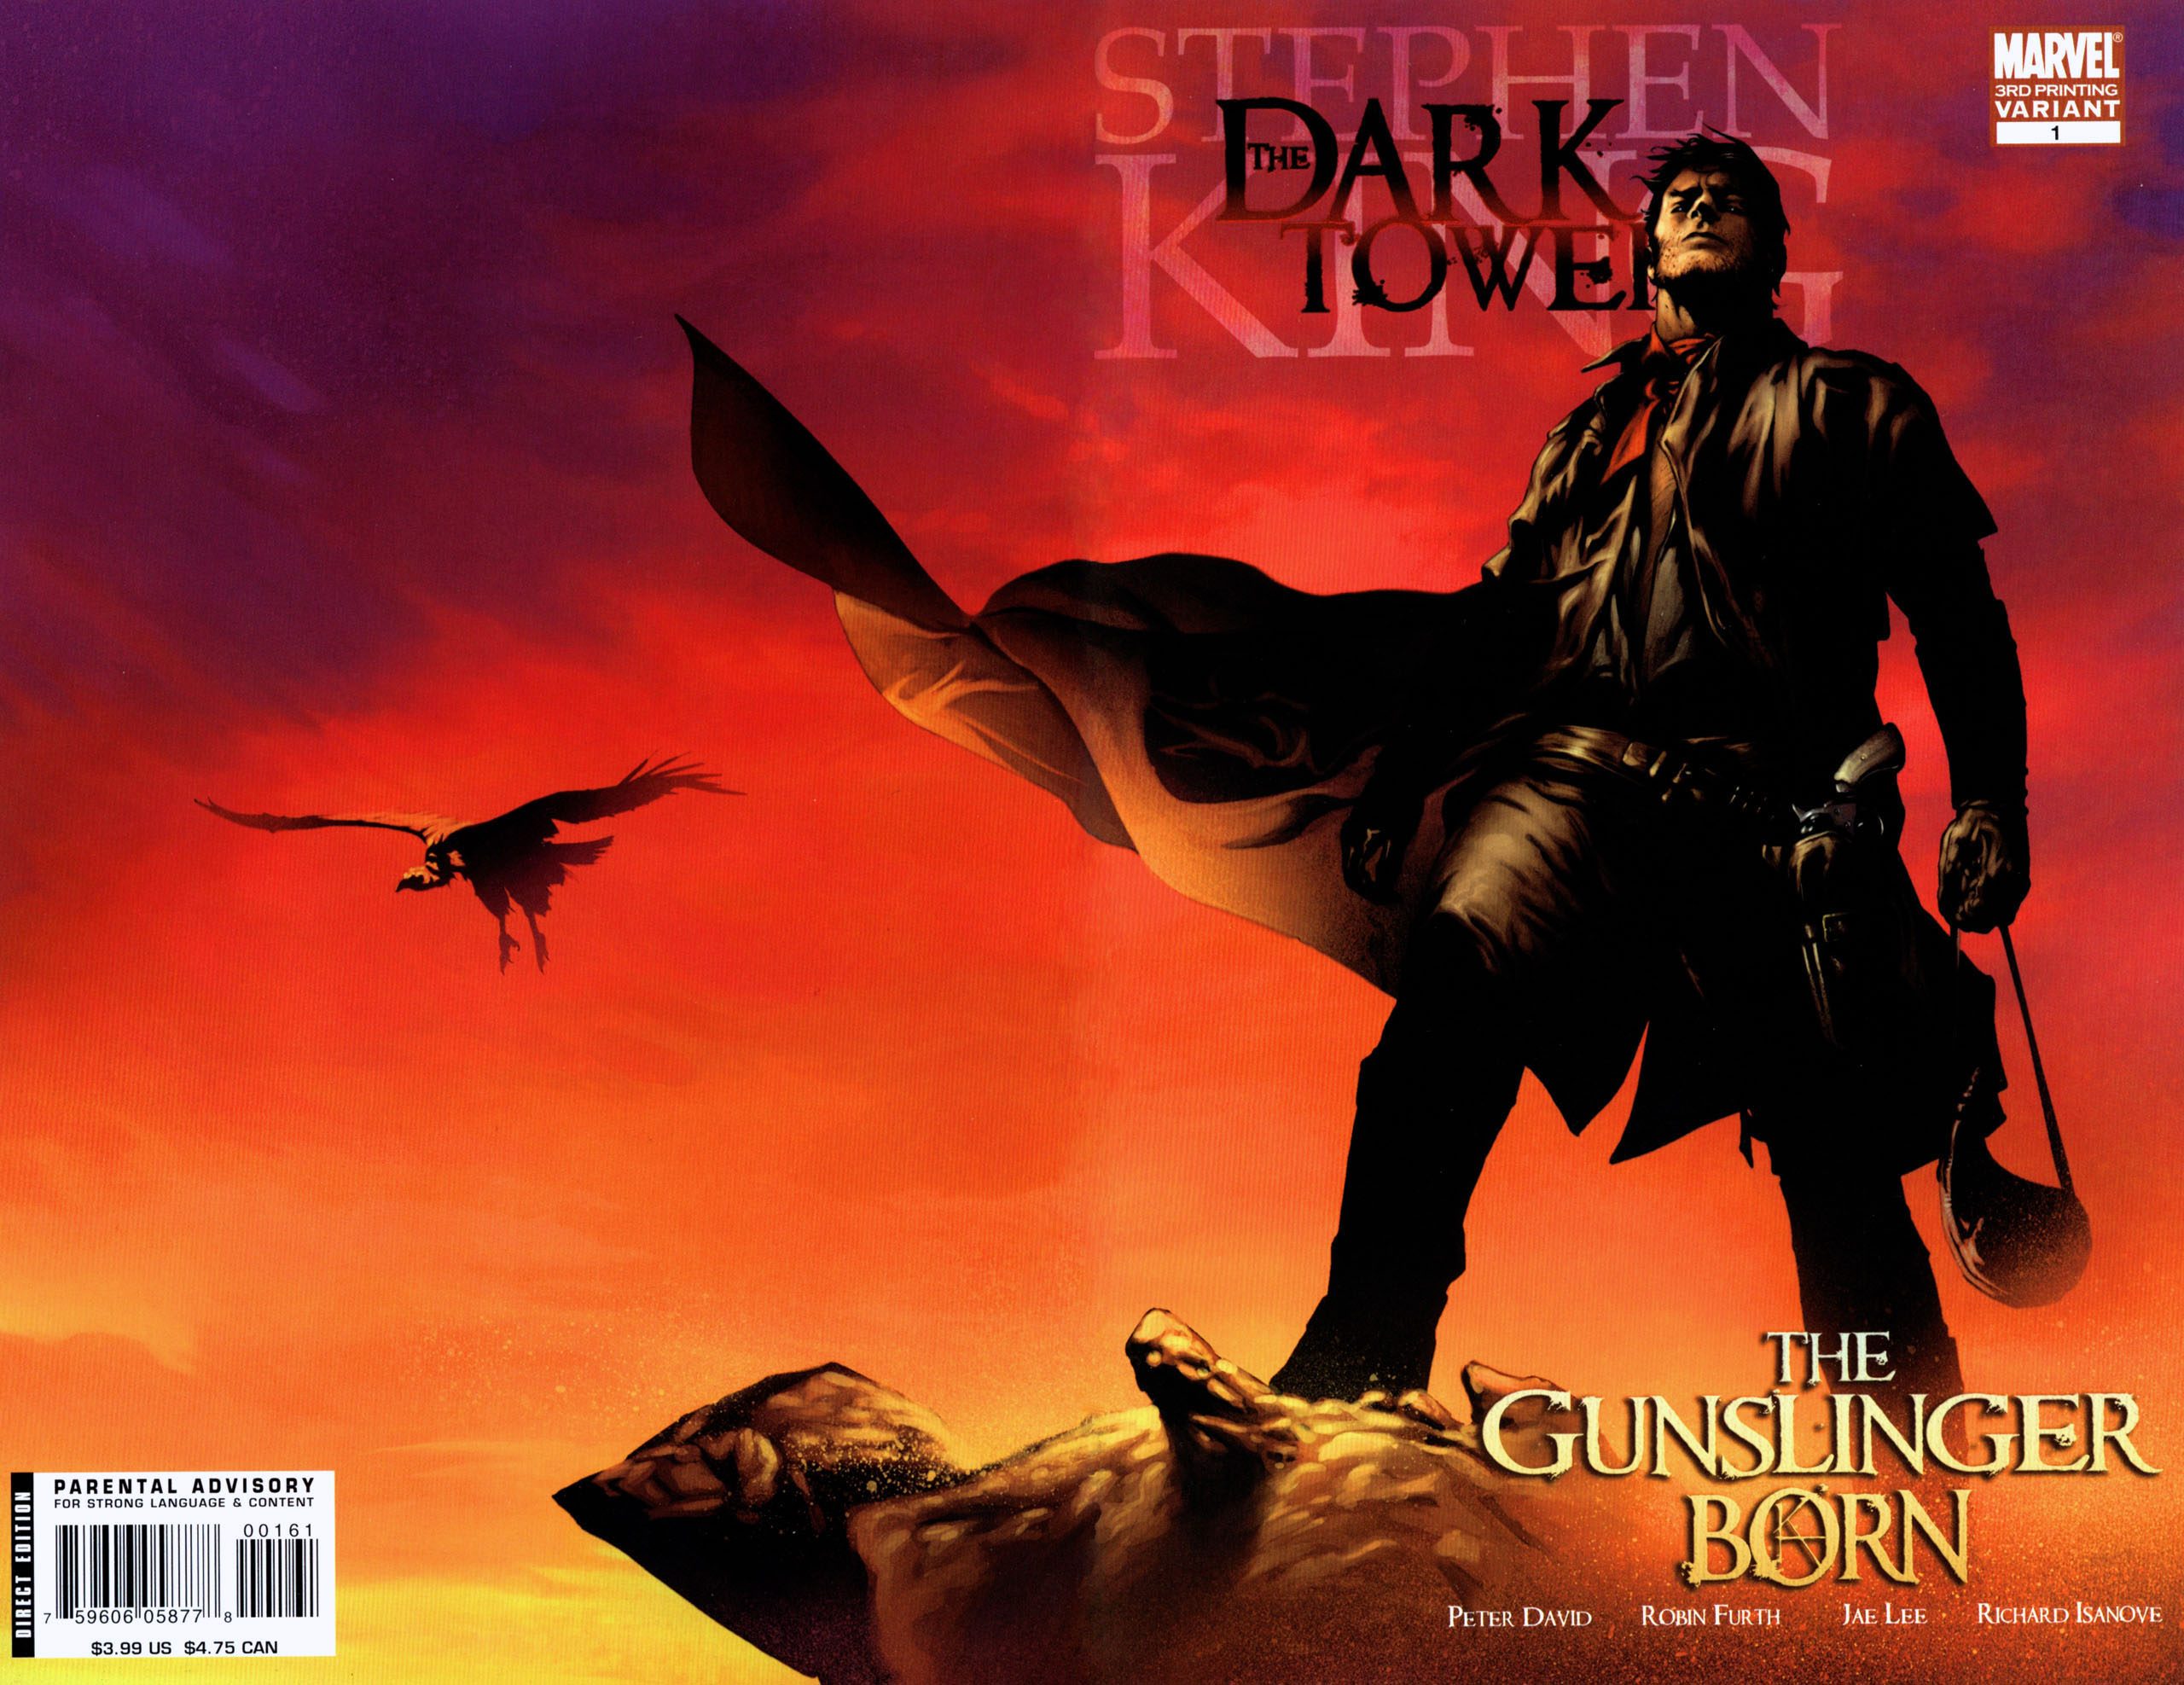 Dark Tower: The Gunslinger Born #1 - Part One 